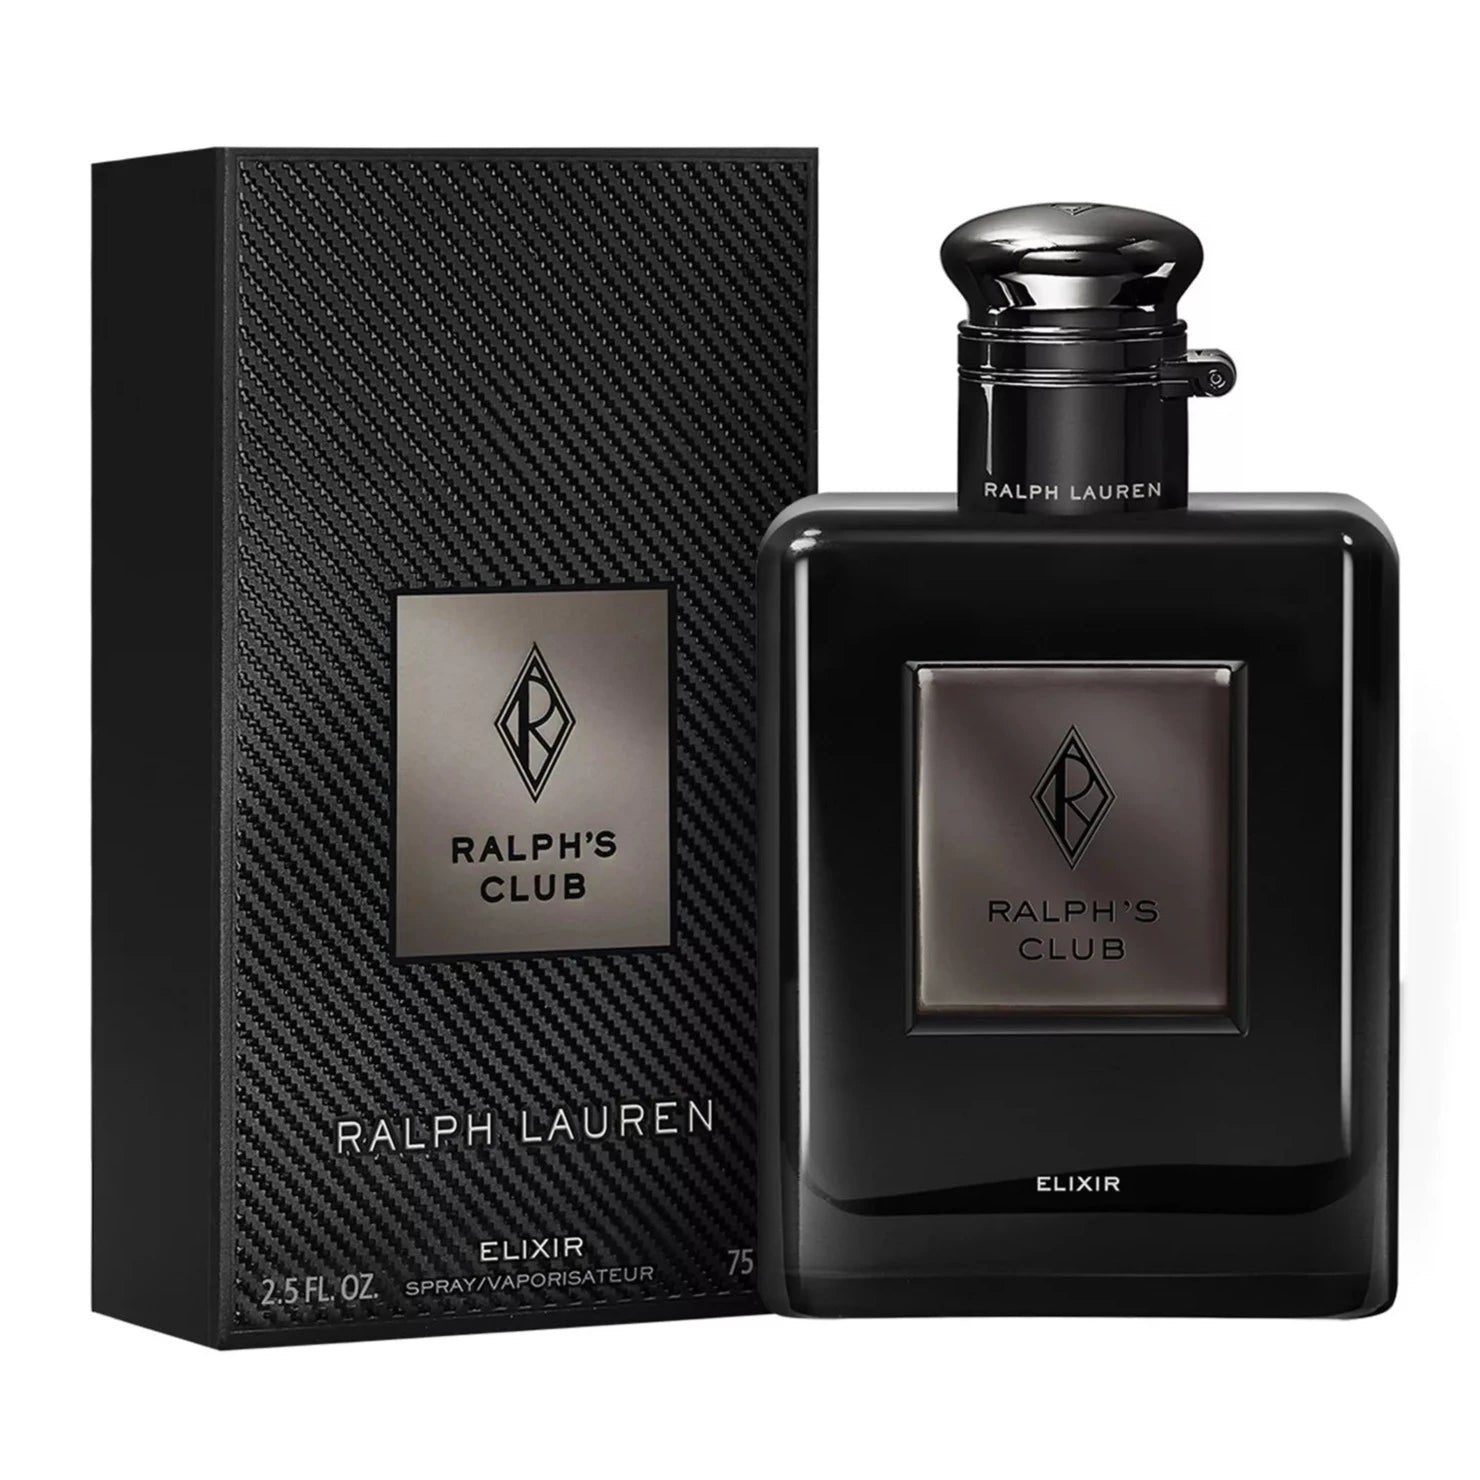 Perfume Ralph Lauren Ralph's Club Elixir Parfum (M) / 75 ml - 36059712831095- Prive Perfumes Honduras